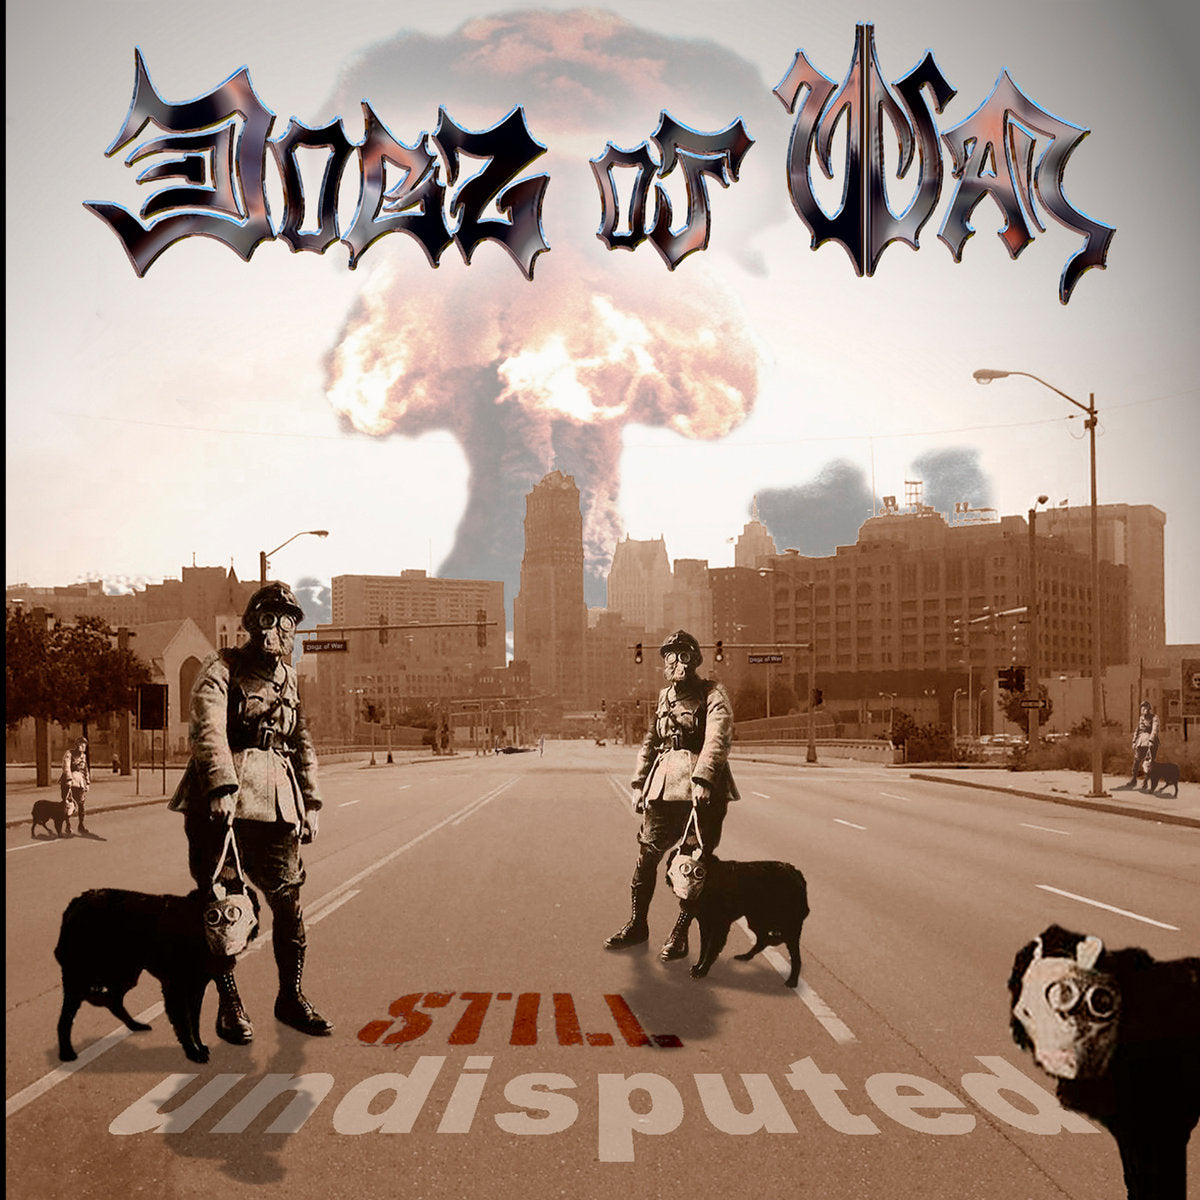 Dogz of War "Still Undisputed" CD